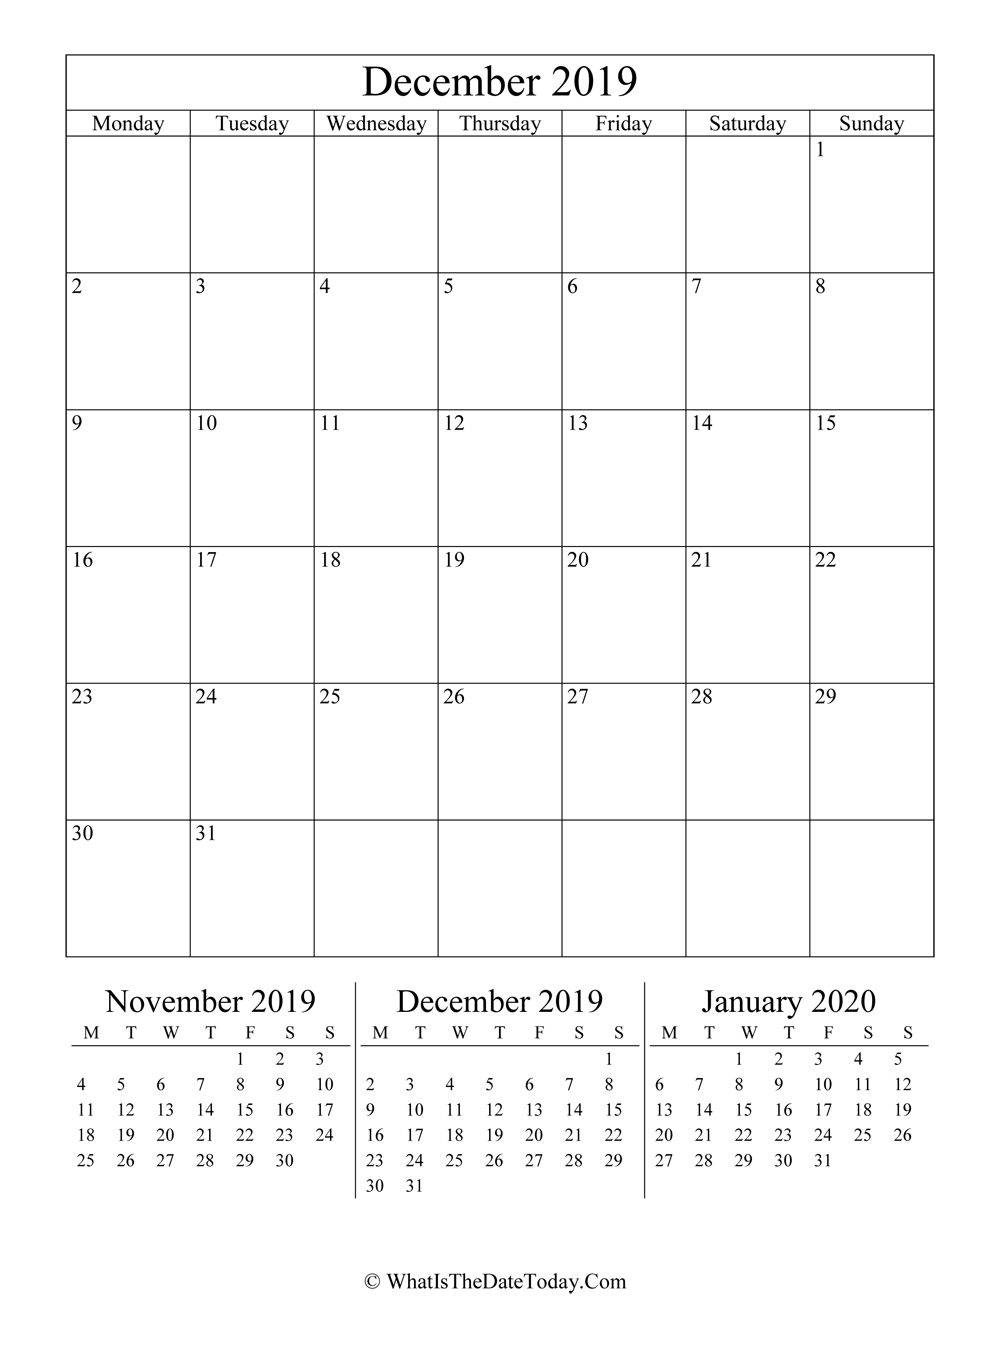 december-2019-editable-calendar-vertical-layout-whatisthedatetoday-com